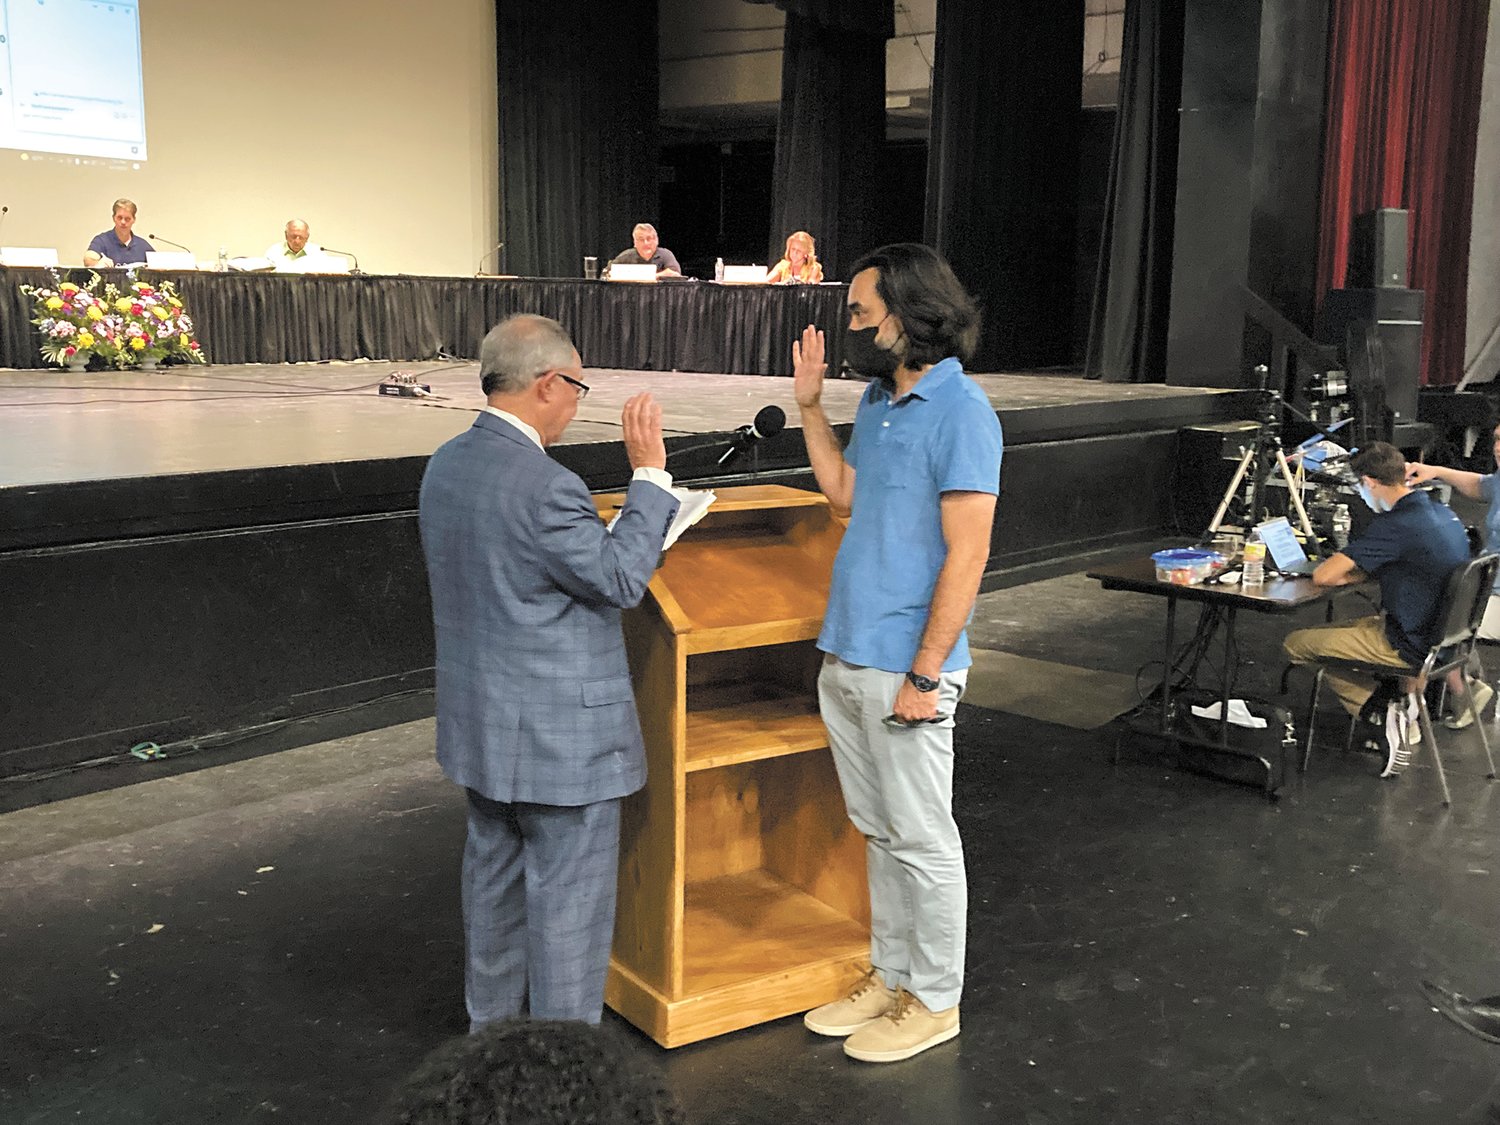 REPRESENTING WARD 1: Keith Catone was sworn in as the Ward 1 School Committee representative on Monday. (Cranston Herald photo)